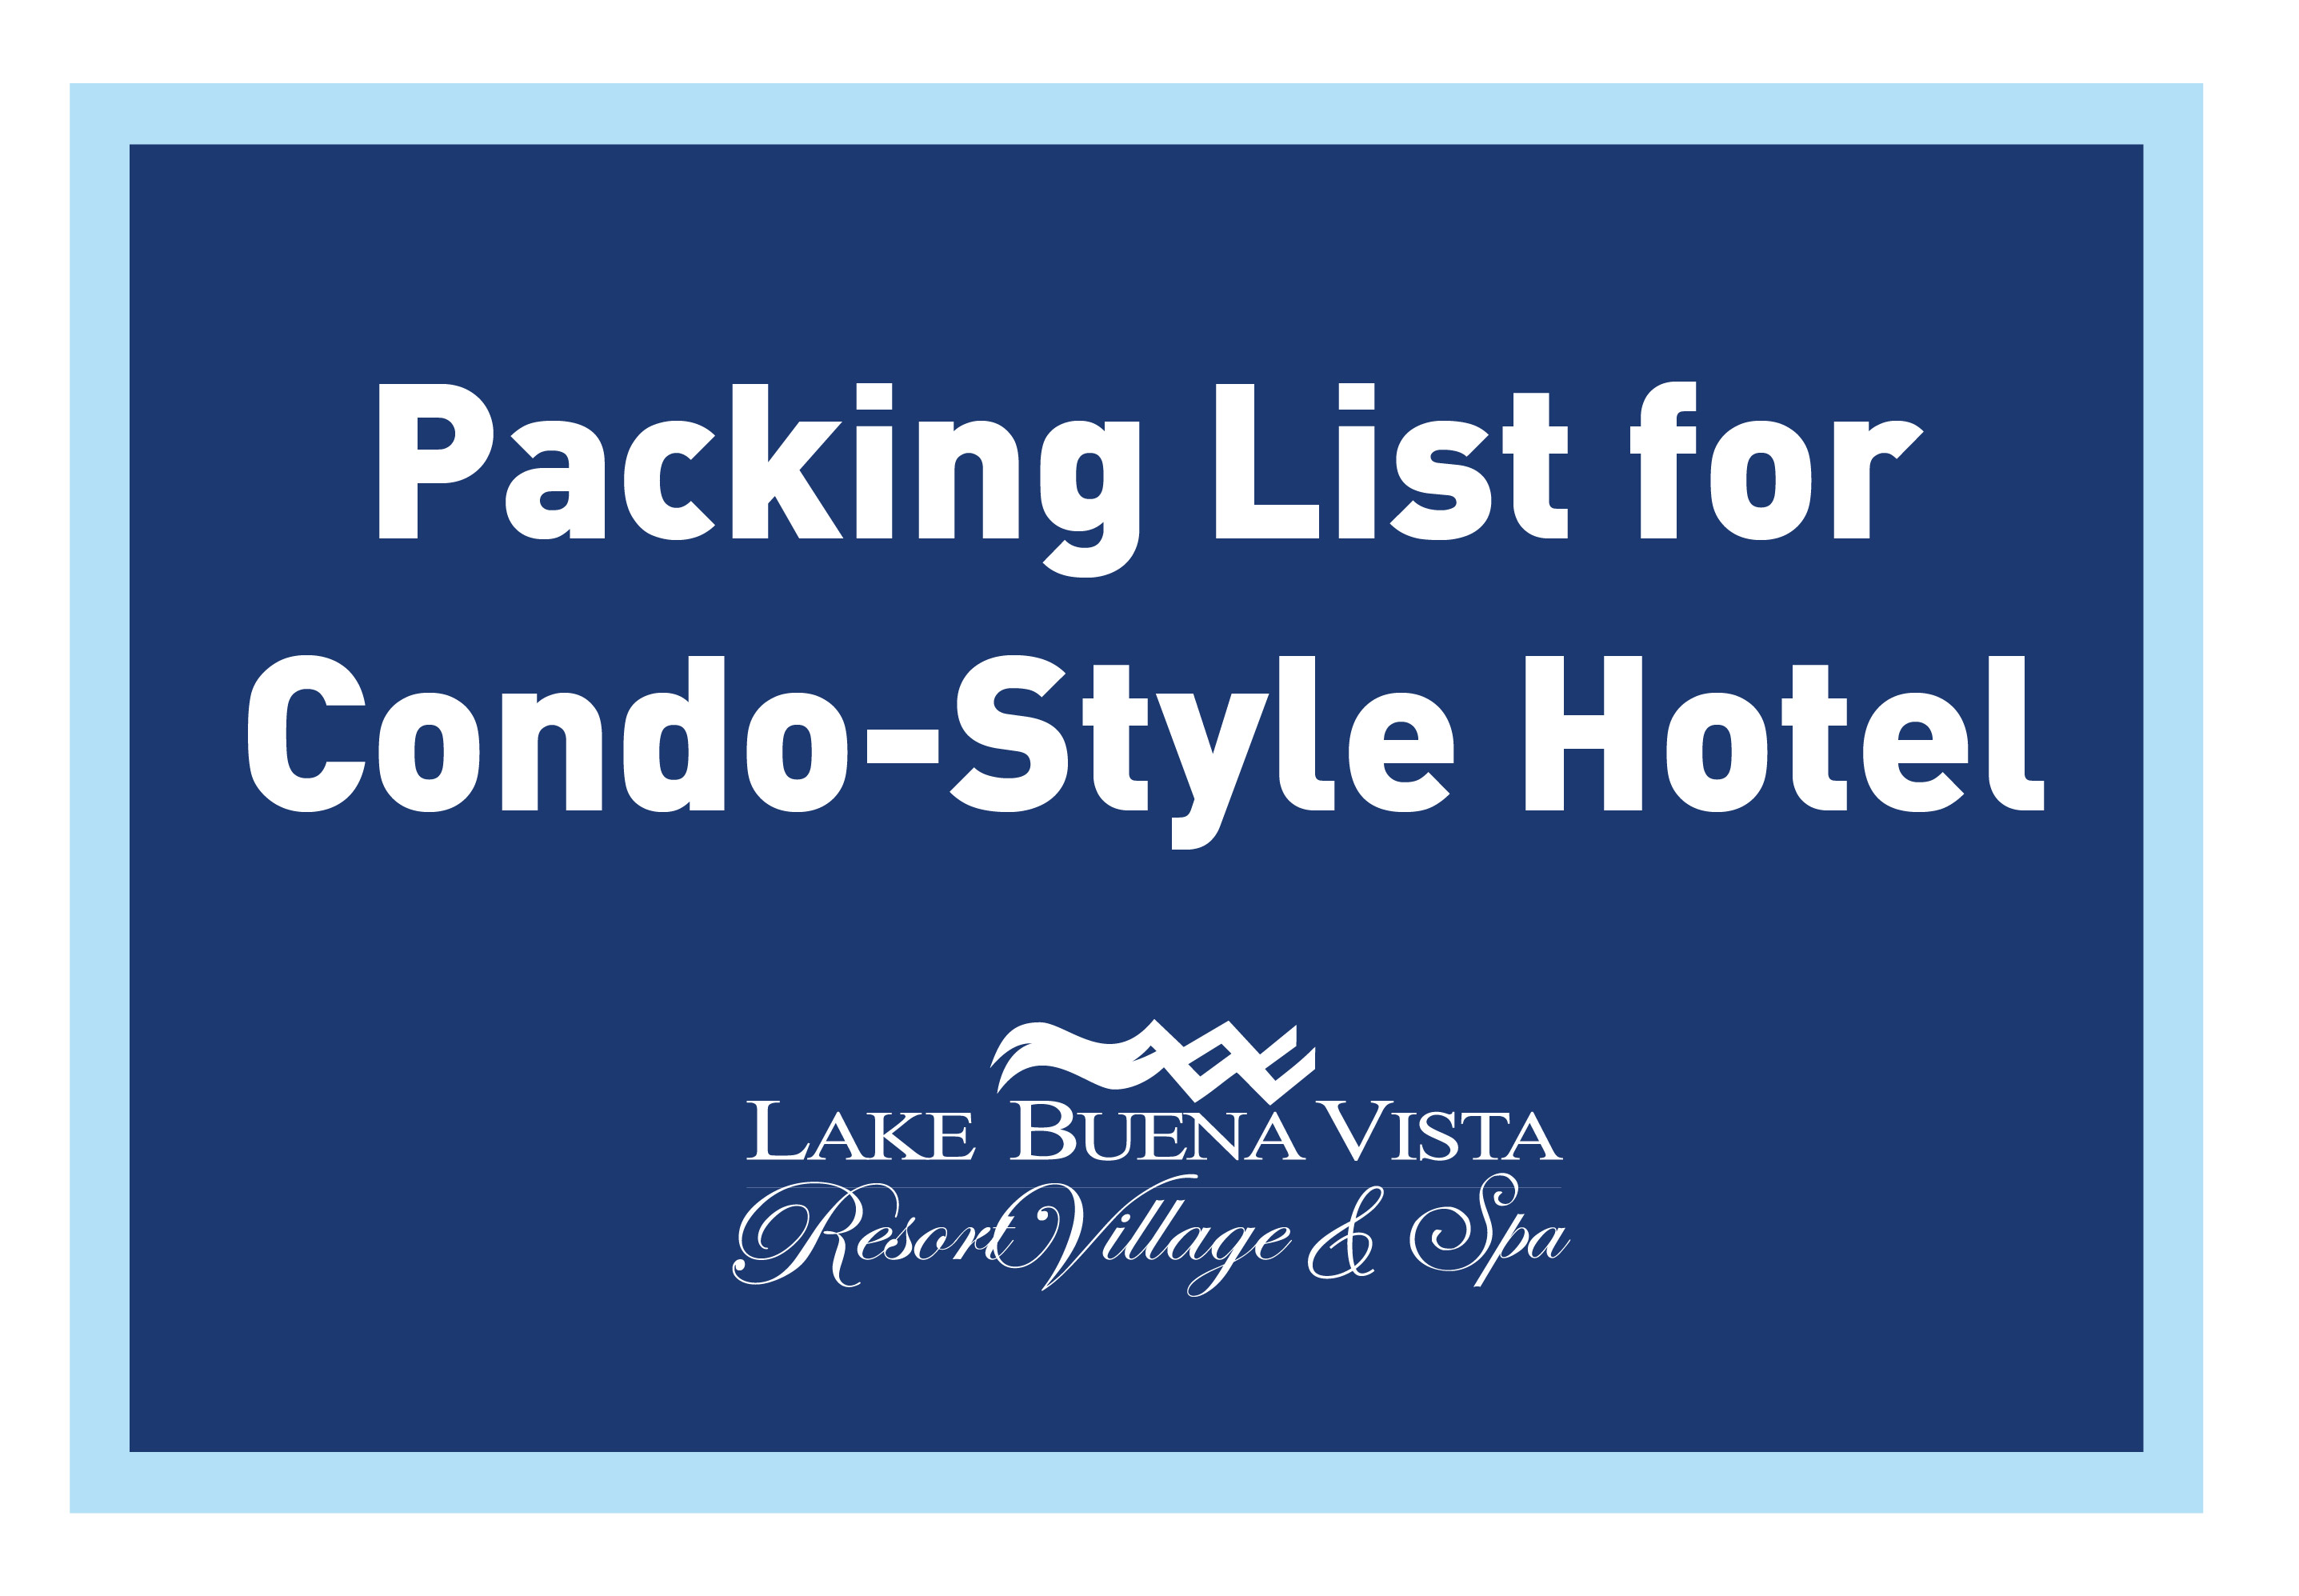 Lake Buena Vista Resort Village & Spa - Packing List